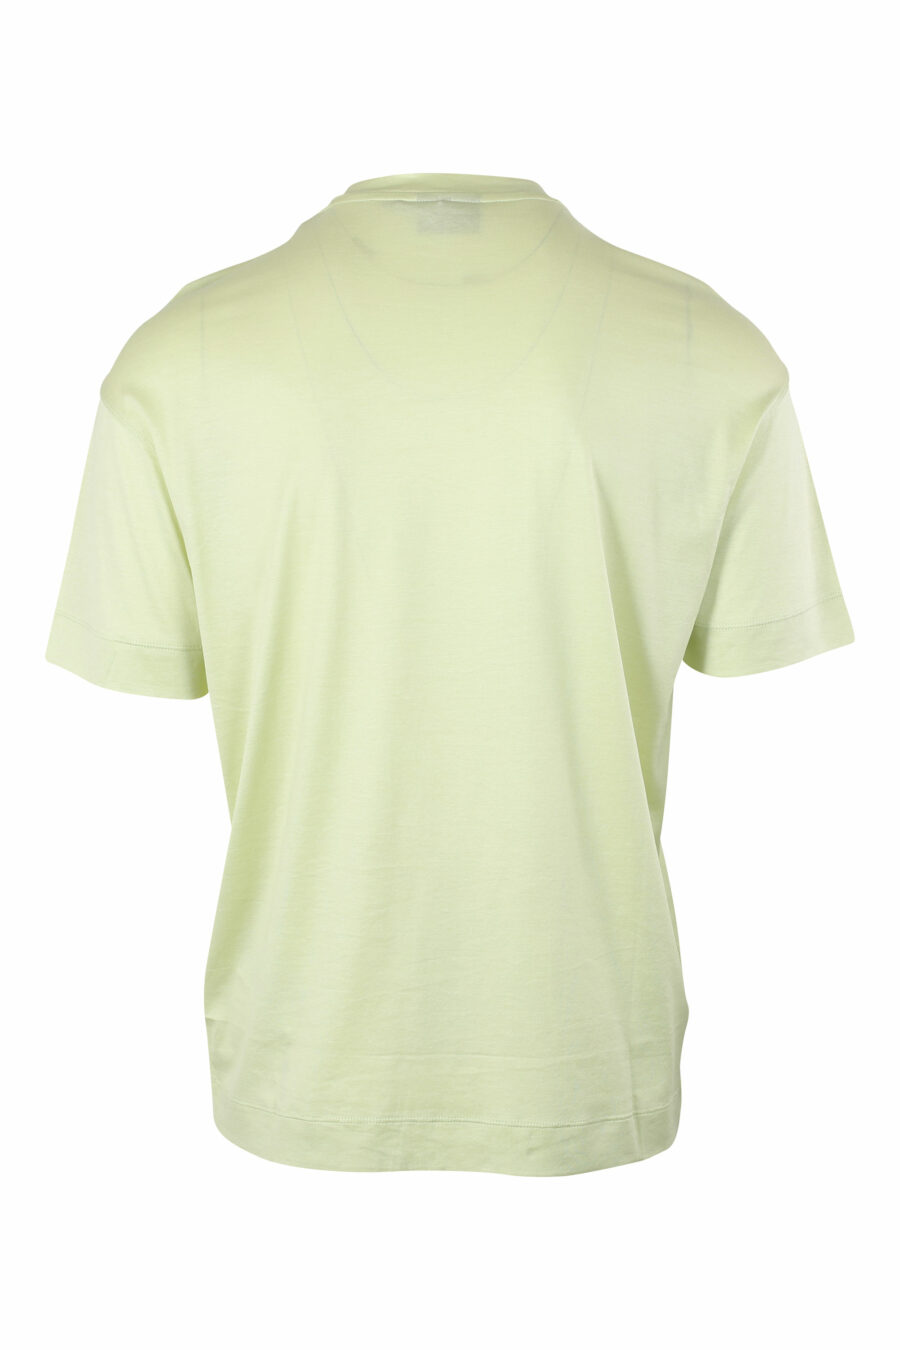 T-shirt vert avec maxilogo centré - IMG 9630